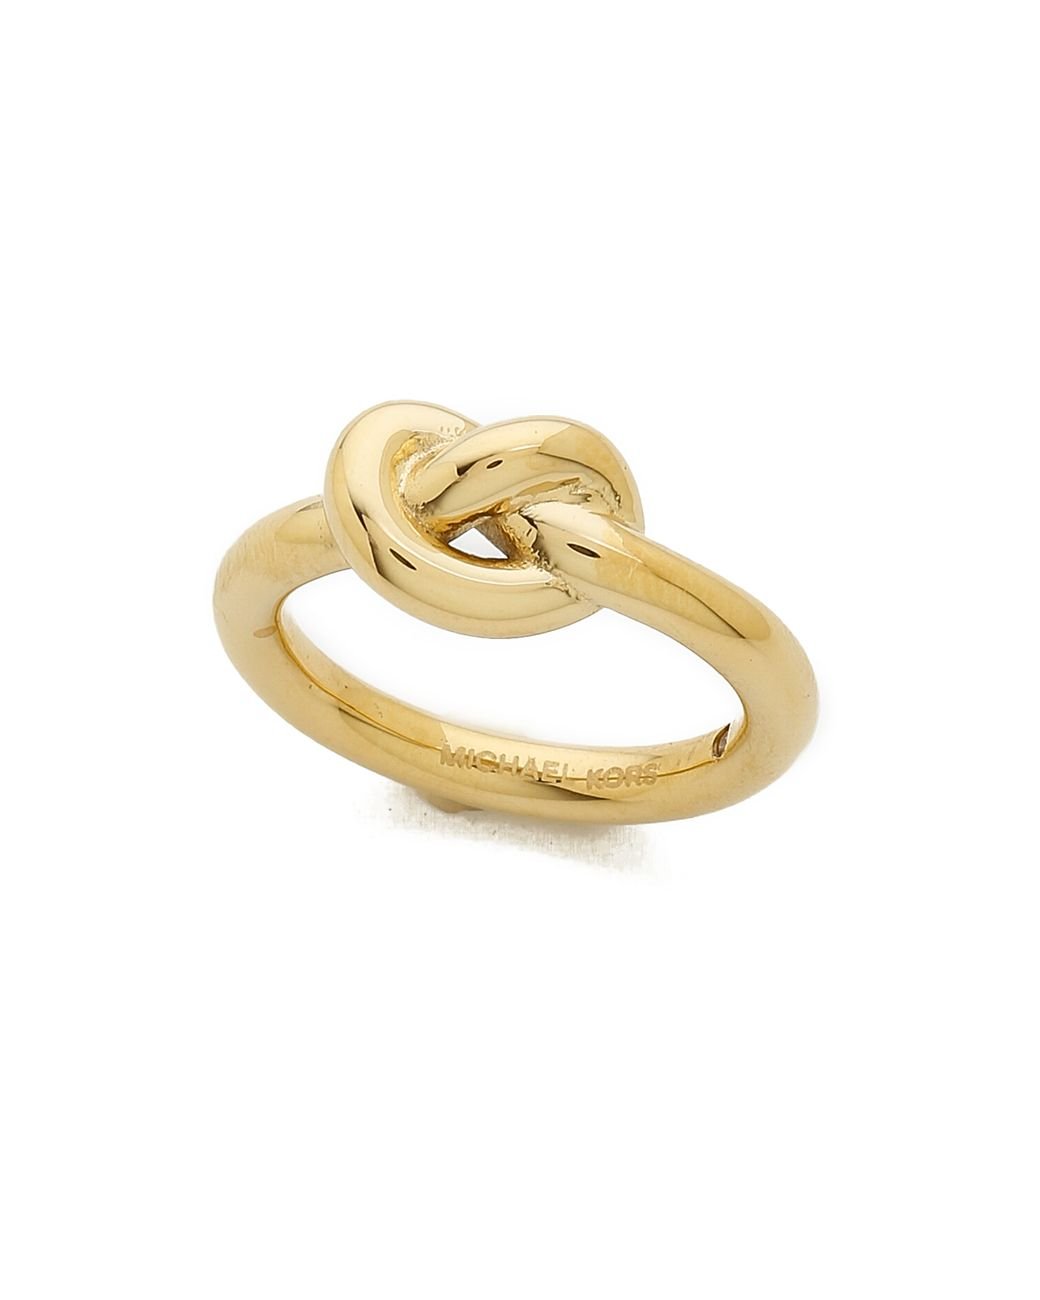 Michael Kors Smooth Metal Knot Ring - Gold in Metallic | Lyst